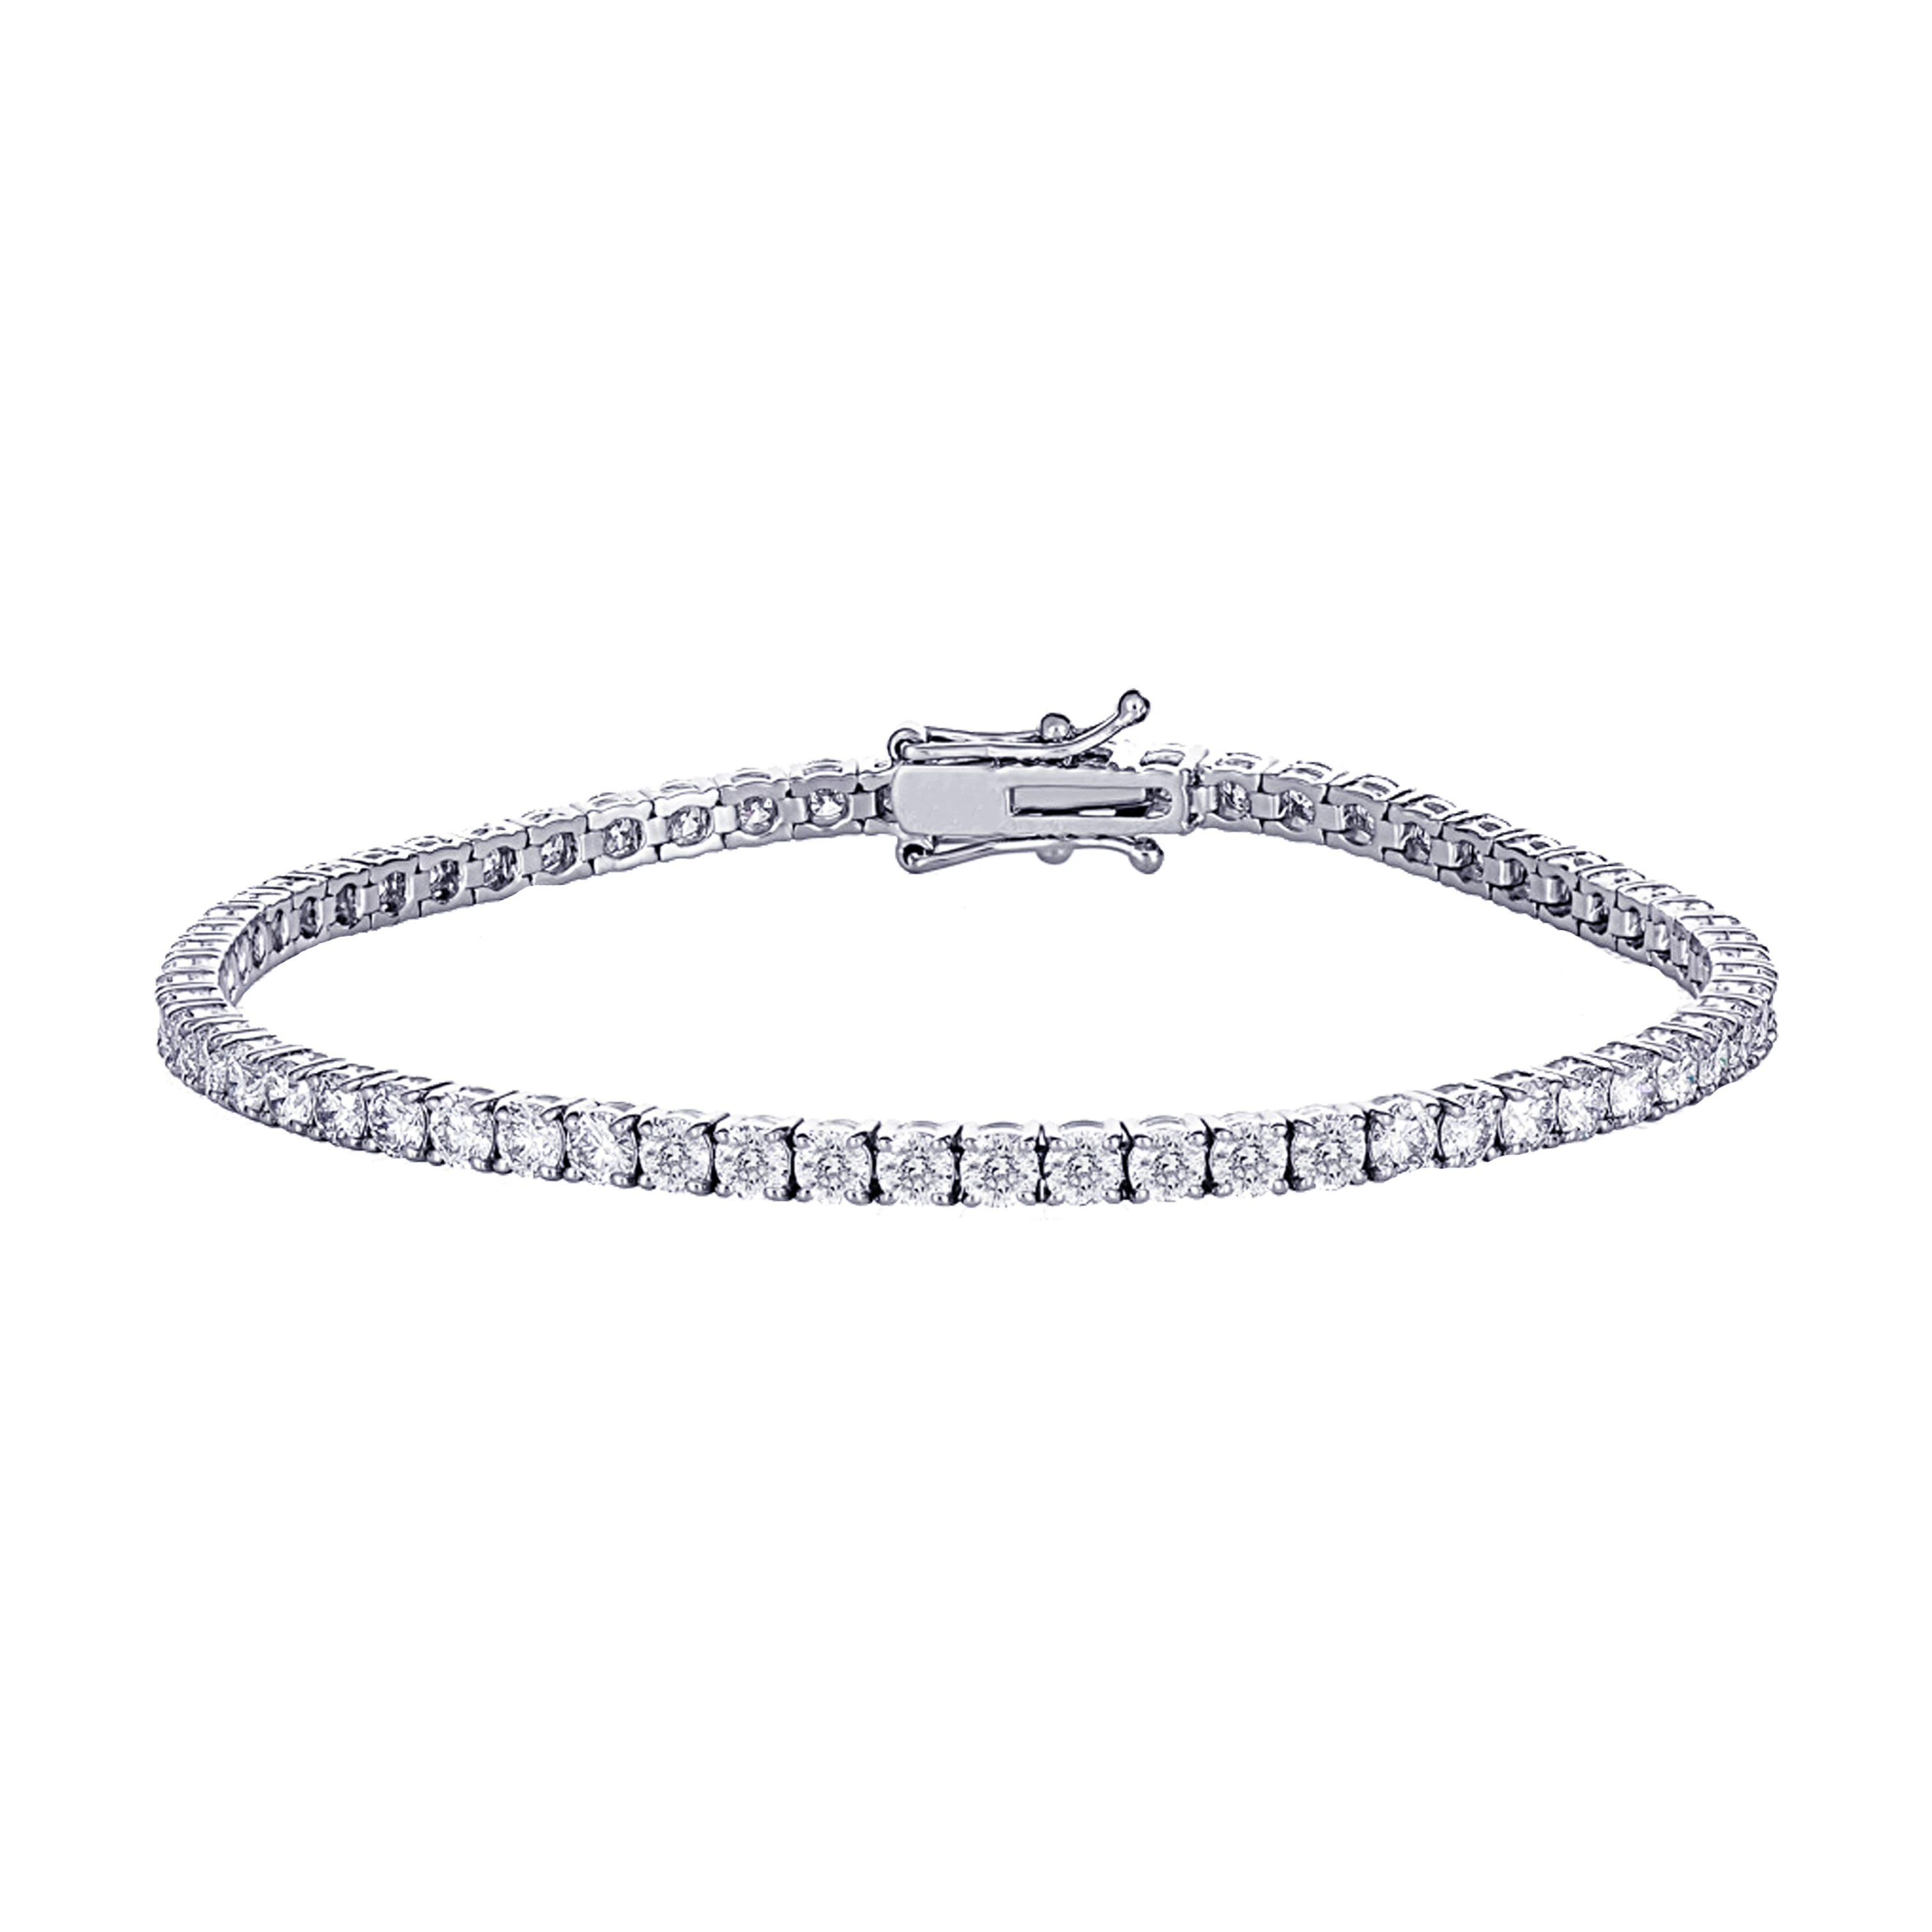 5.53 Carat Diamond Tennis Bracelet